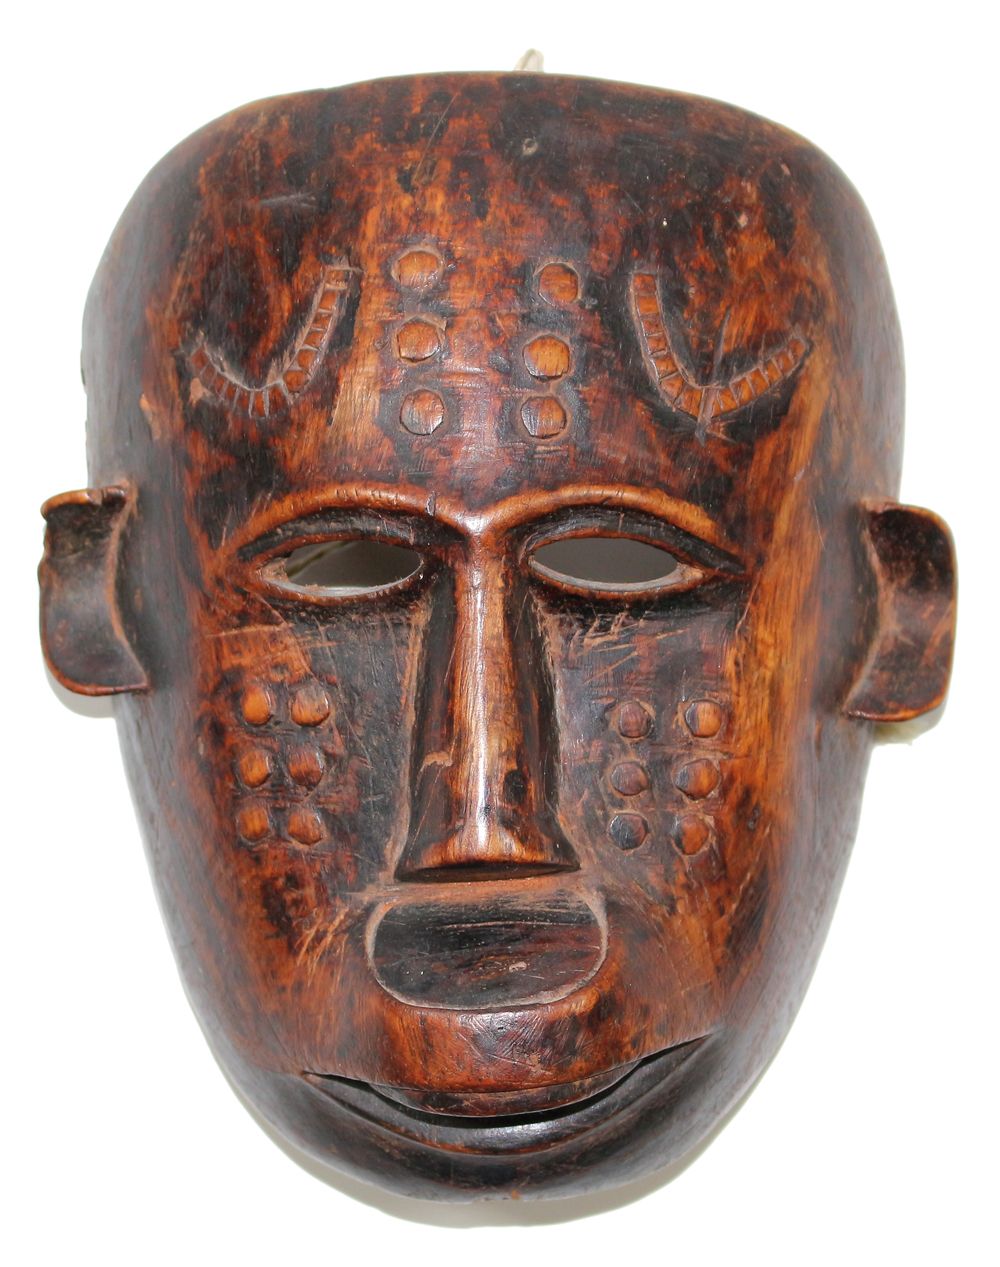 Maske der Makonde Tansania. Dunkle Gesichtsmaske mit erhöhter Lippe, Punktuelle &hellip;